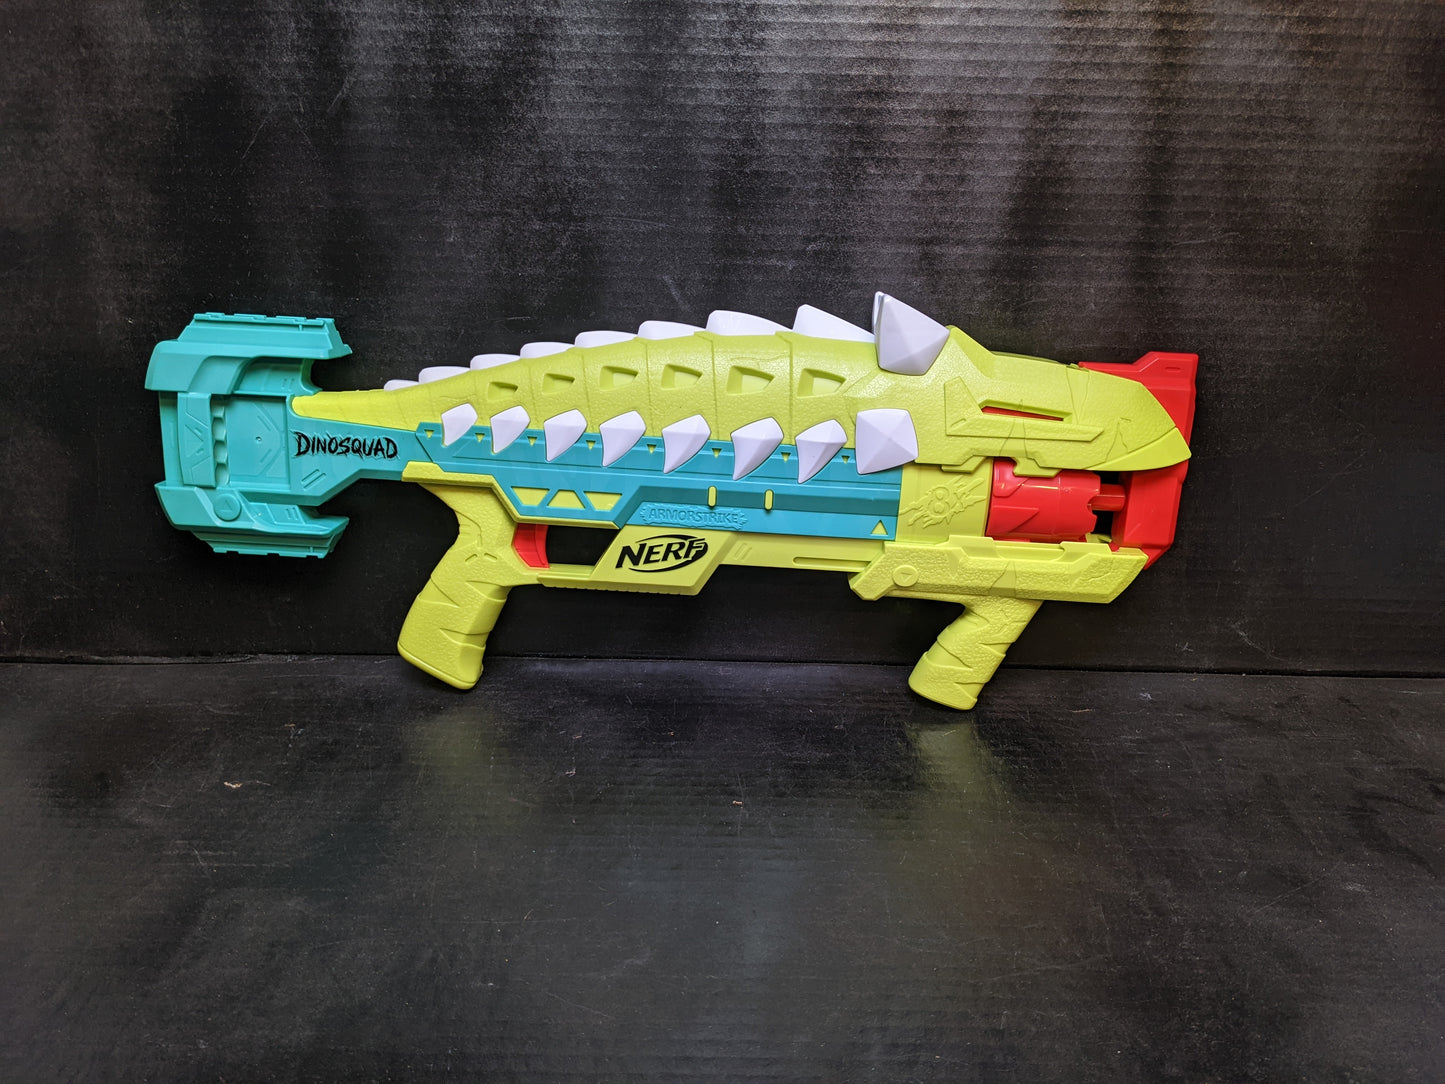 Nerf DinoSquad Armorstrike - Nerf